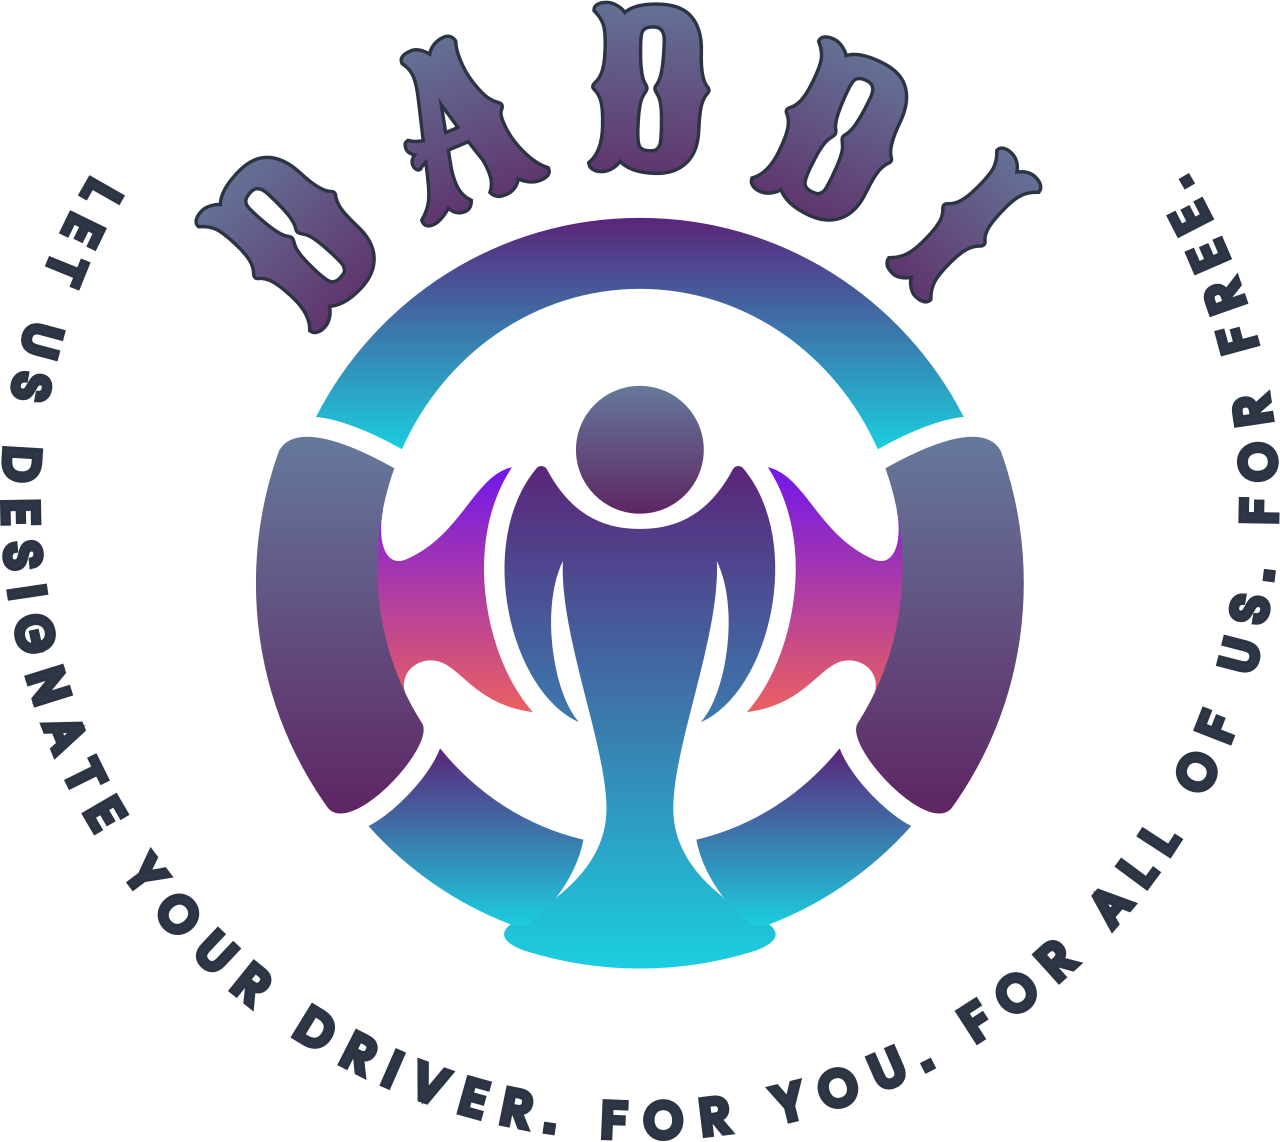 DADDI 's logo